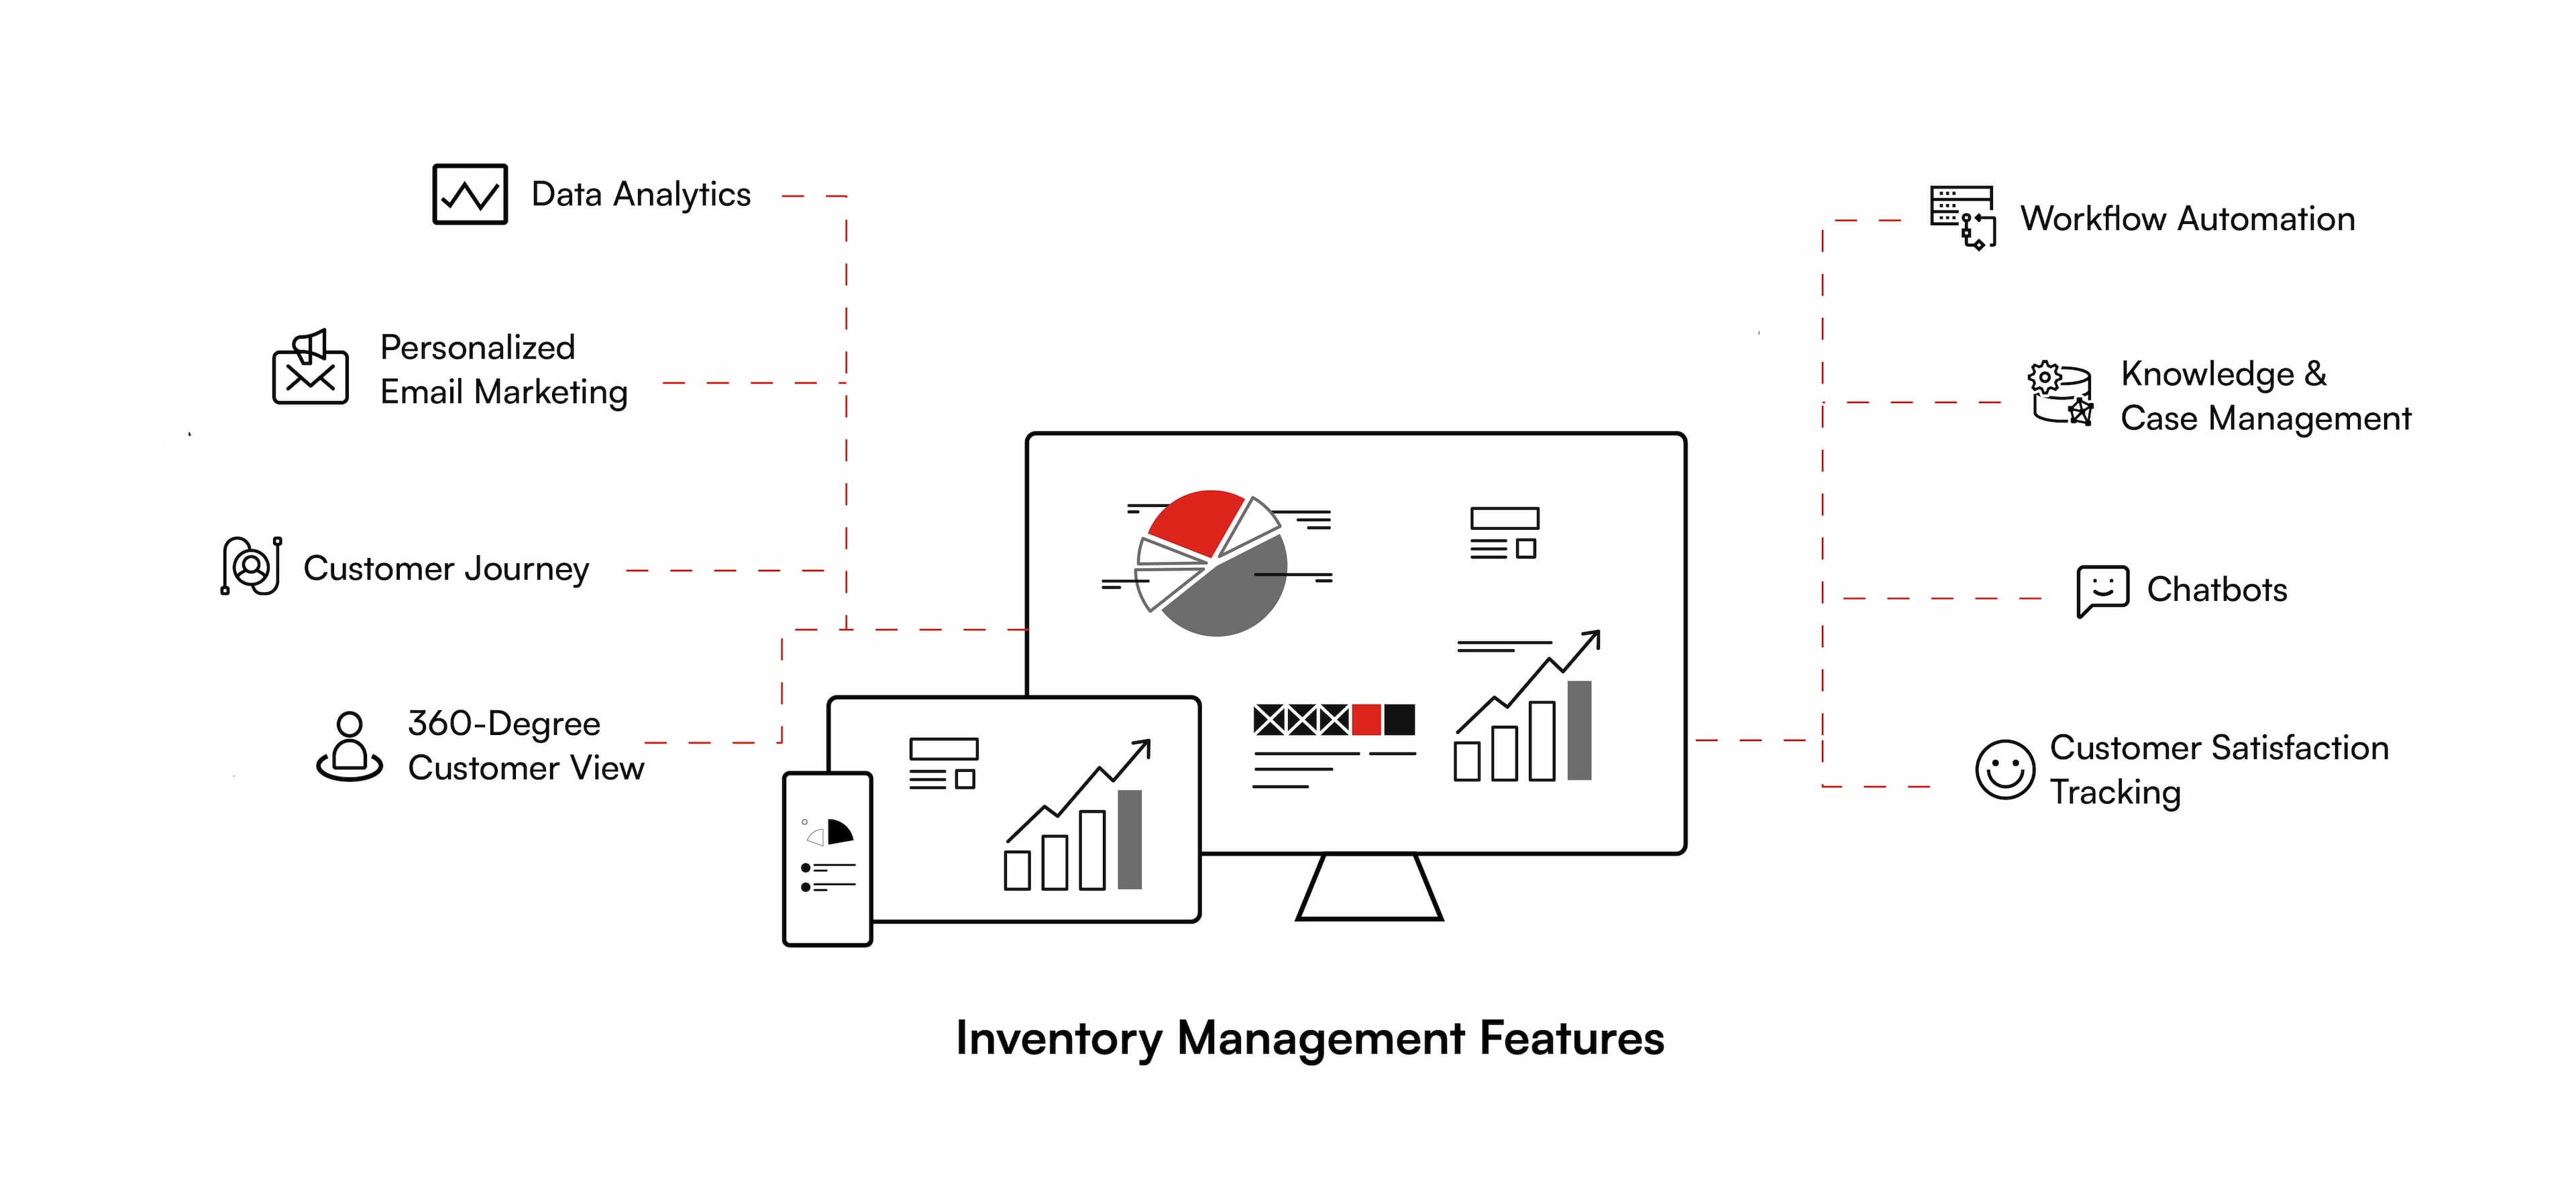 Inventory Managment